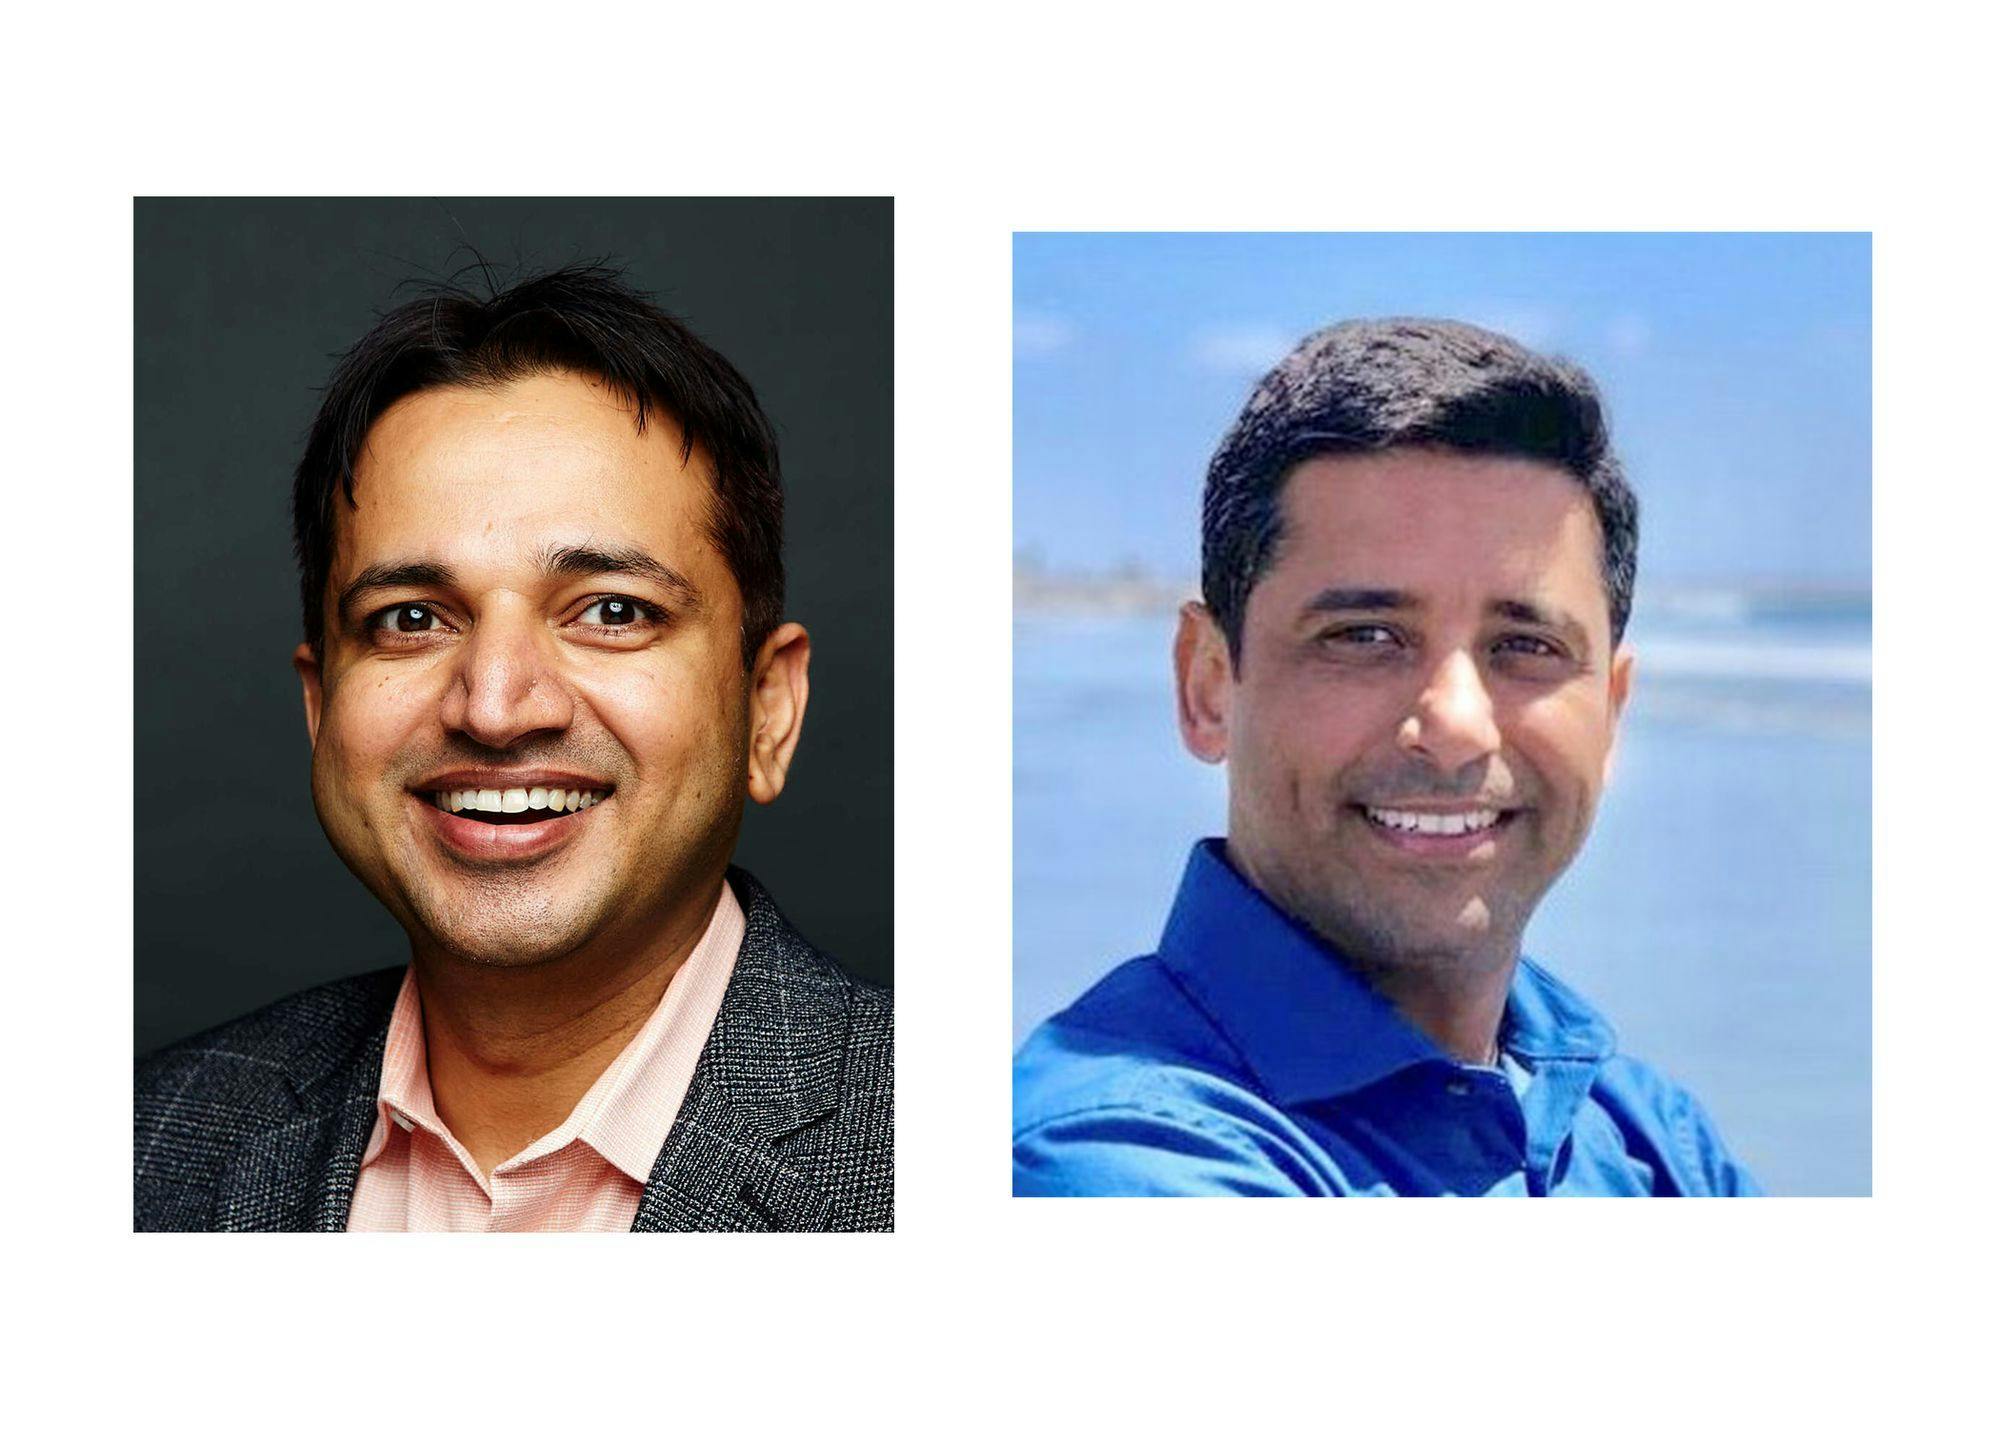 Left: Aman Thukral, Director, Clinical Systems & Digital Operations, Abbvie

Right: Sanjay Bhardwaj, Global Head of Clinical Technology Strategy & Operations, AbbVie